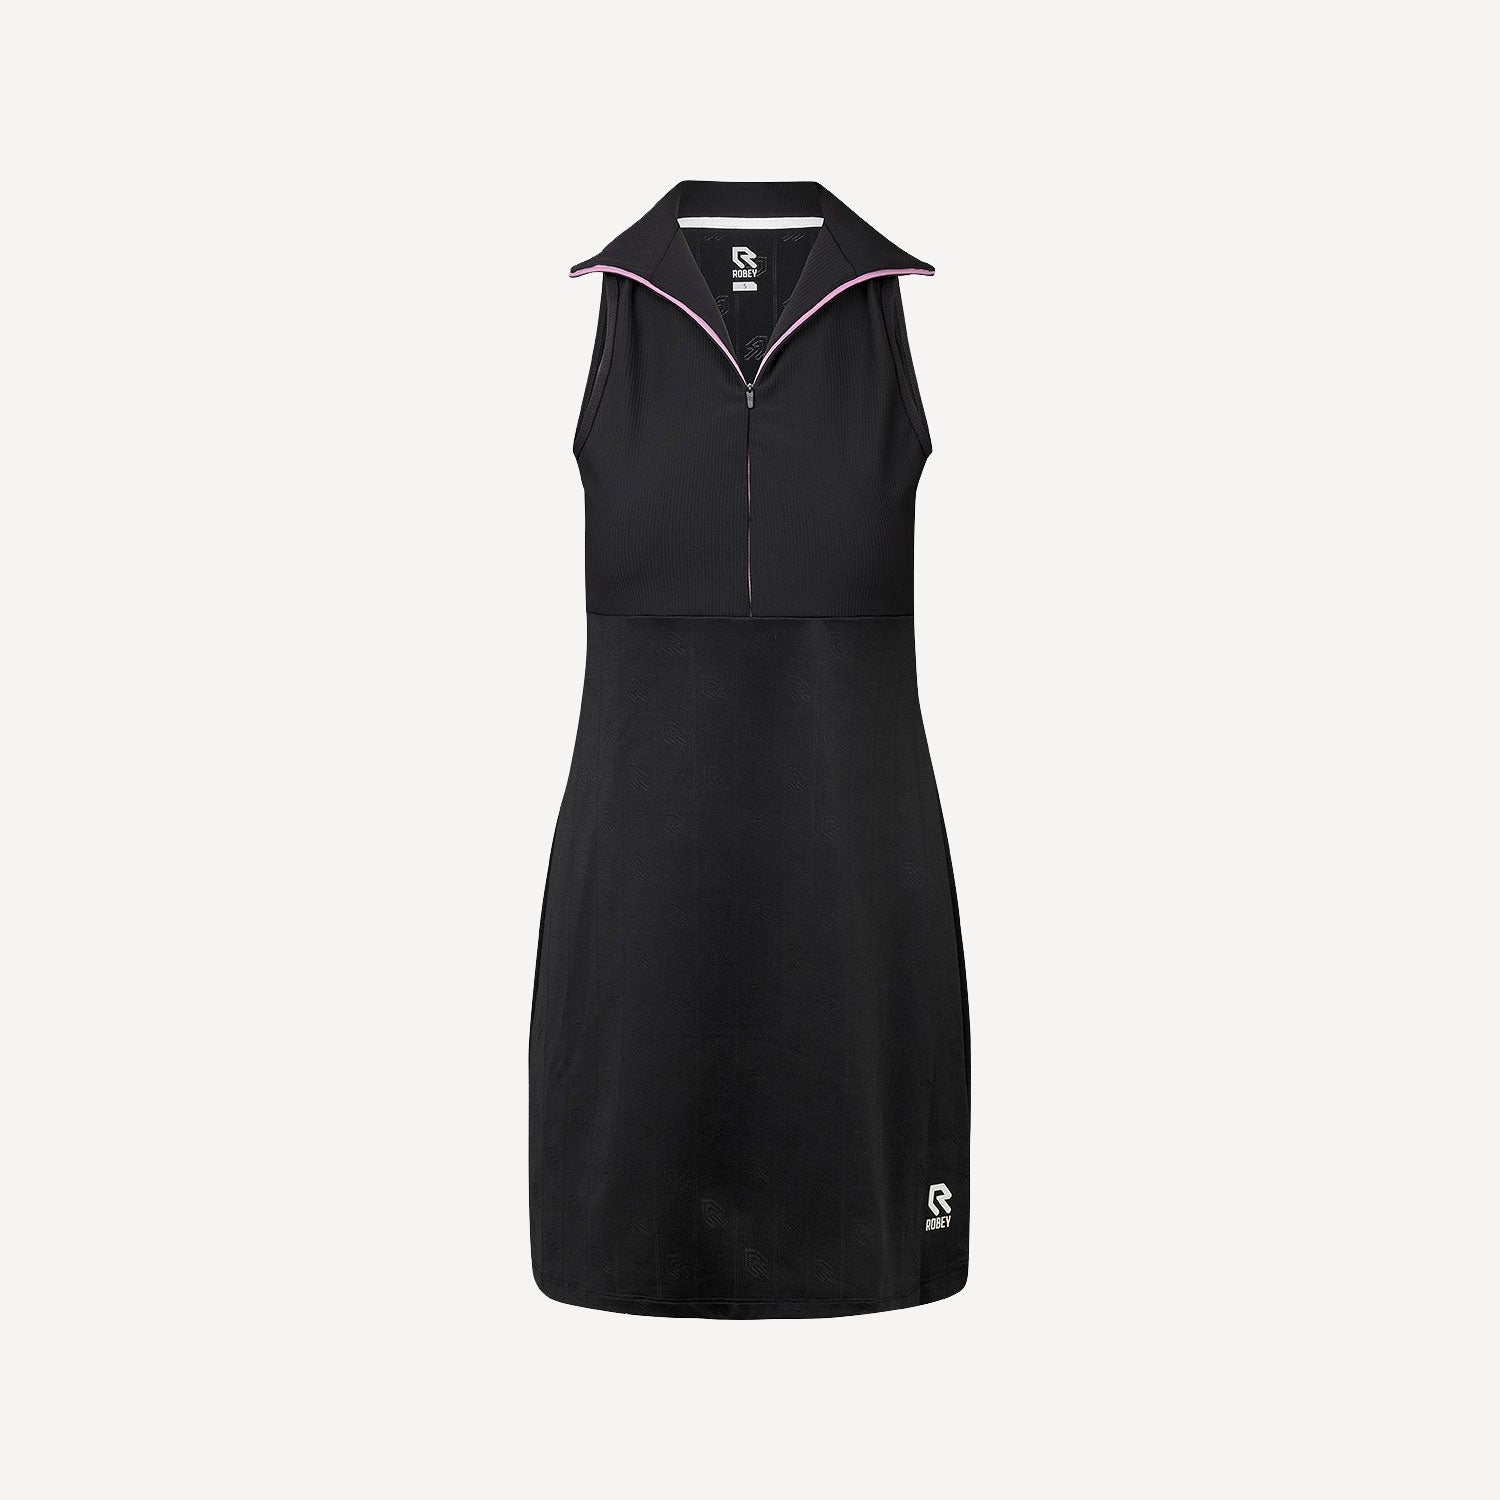 Robey Ace Women's Tennis Dress - Black (1)